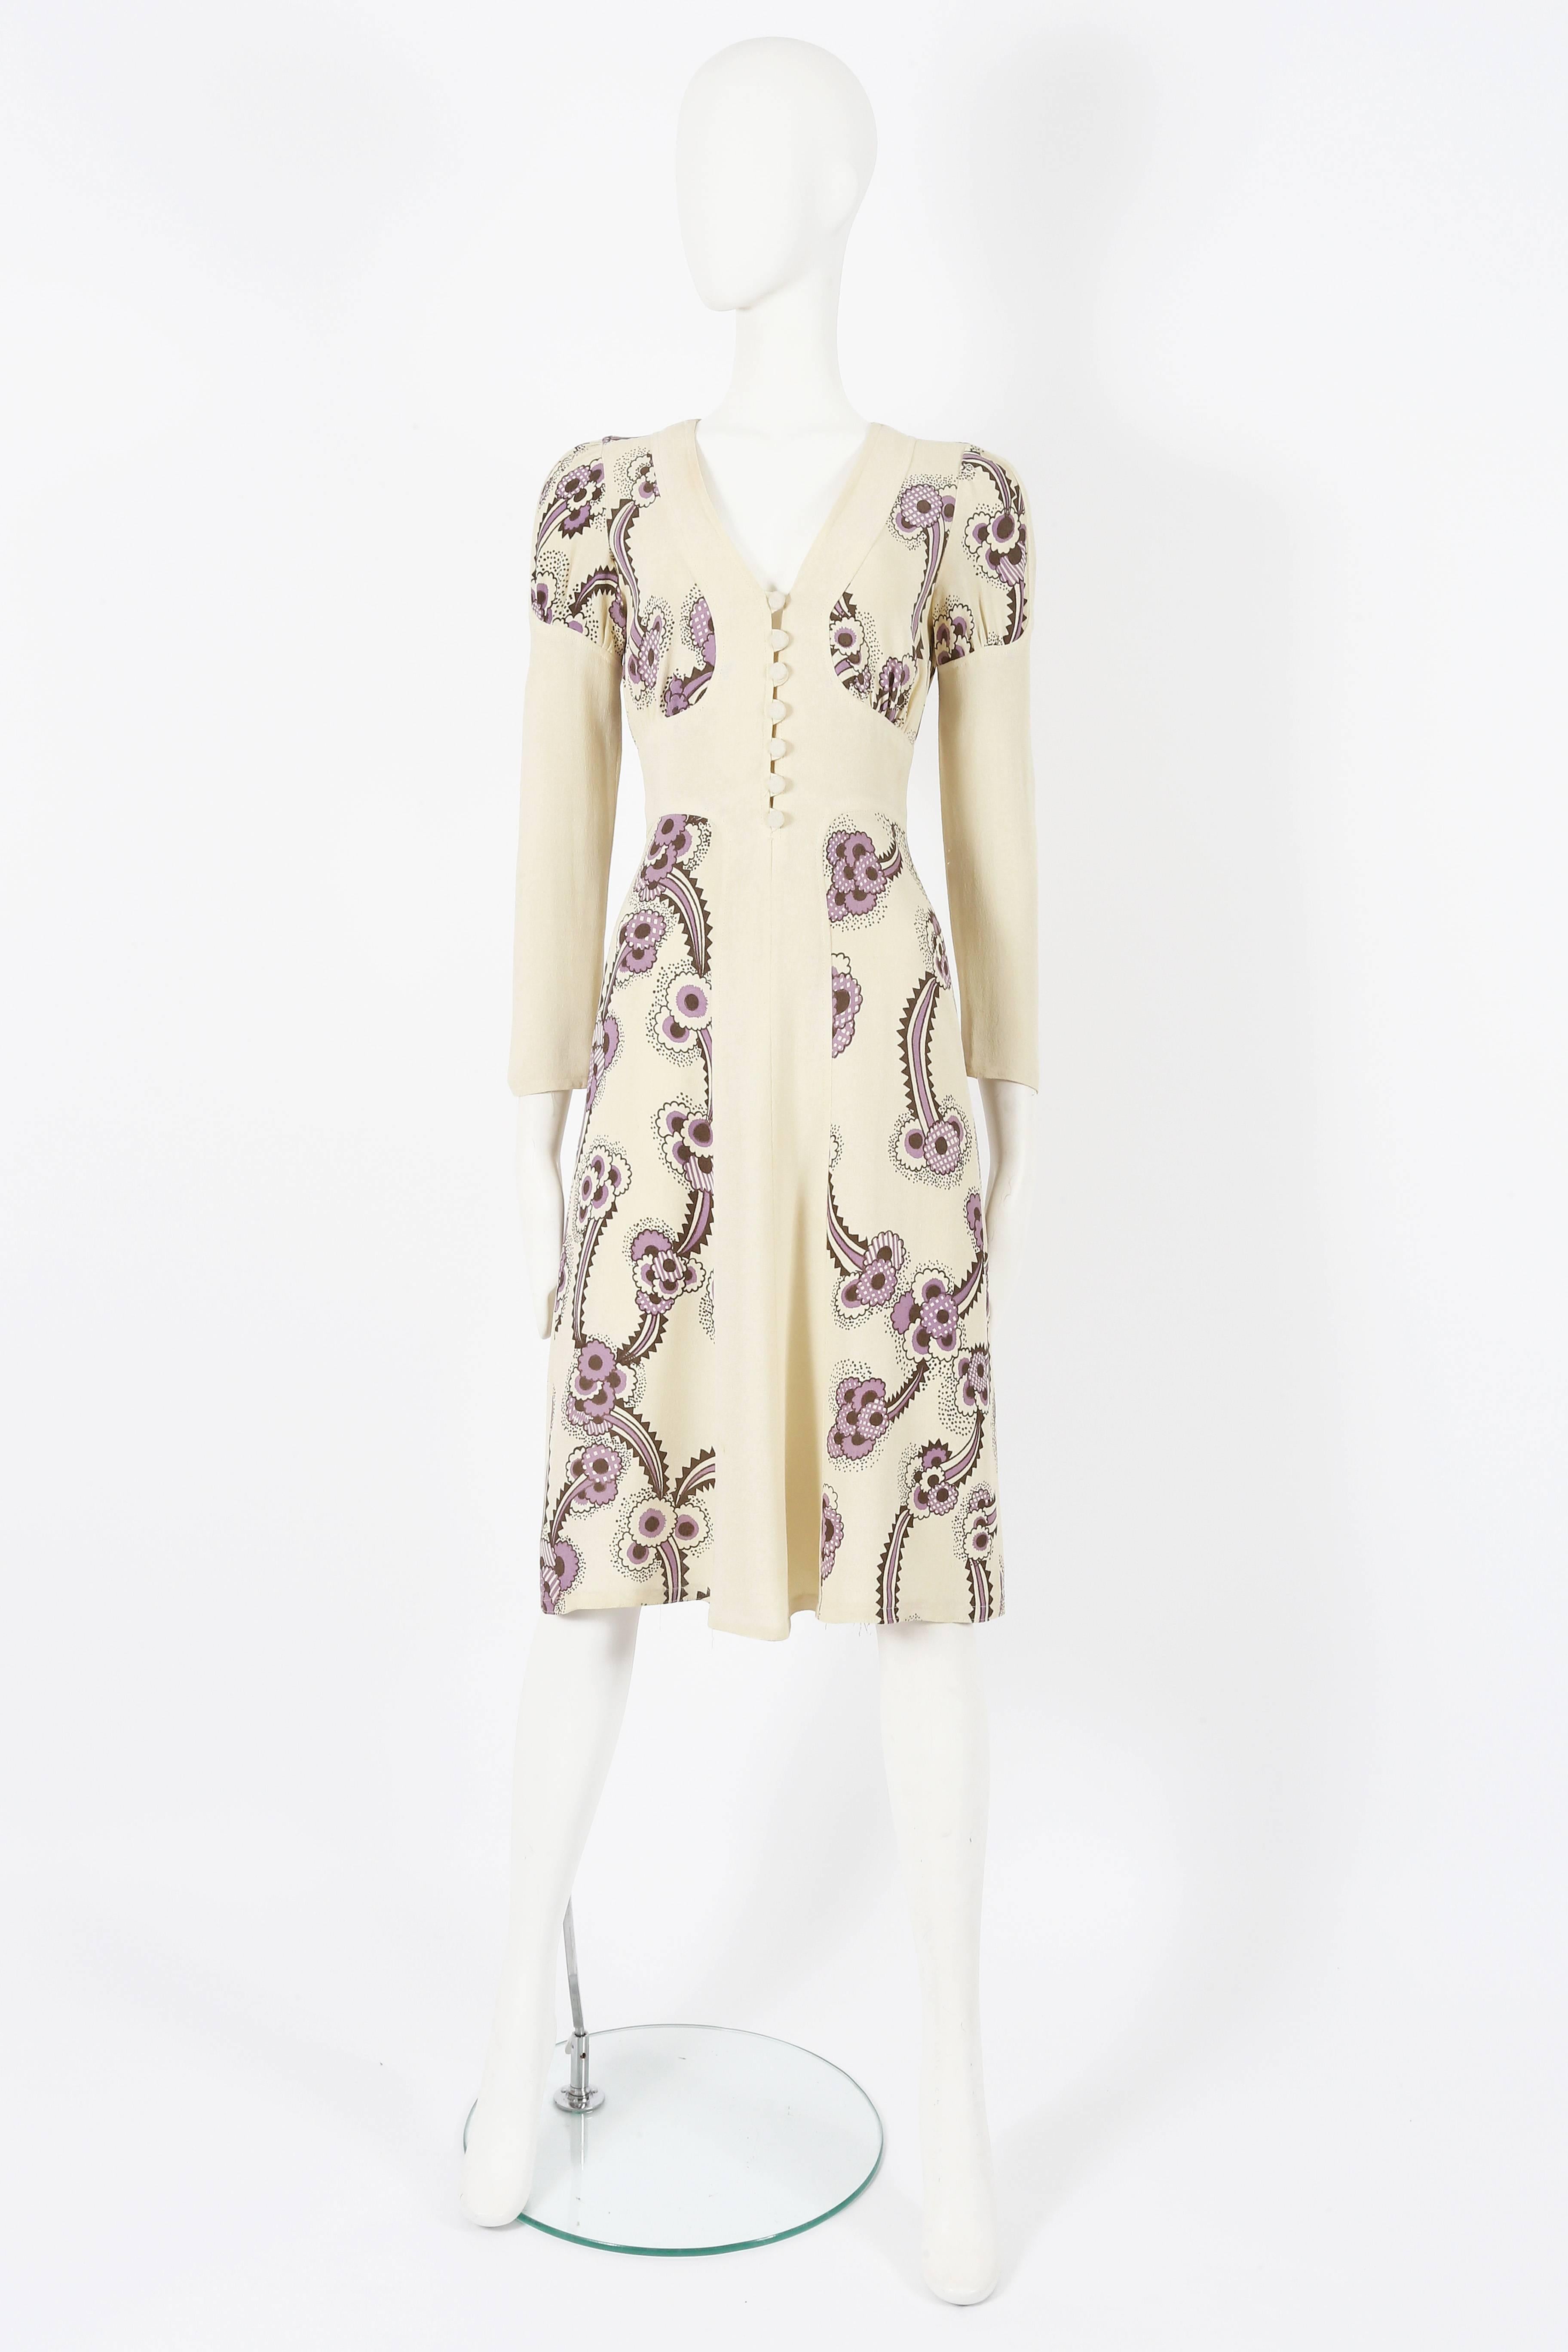 Beige Ossie Clark ivory moss crepe 'Floating Daisies' dress, circa 1970s